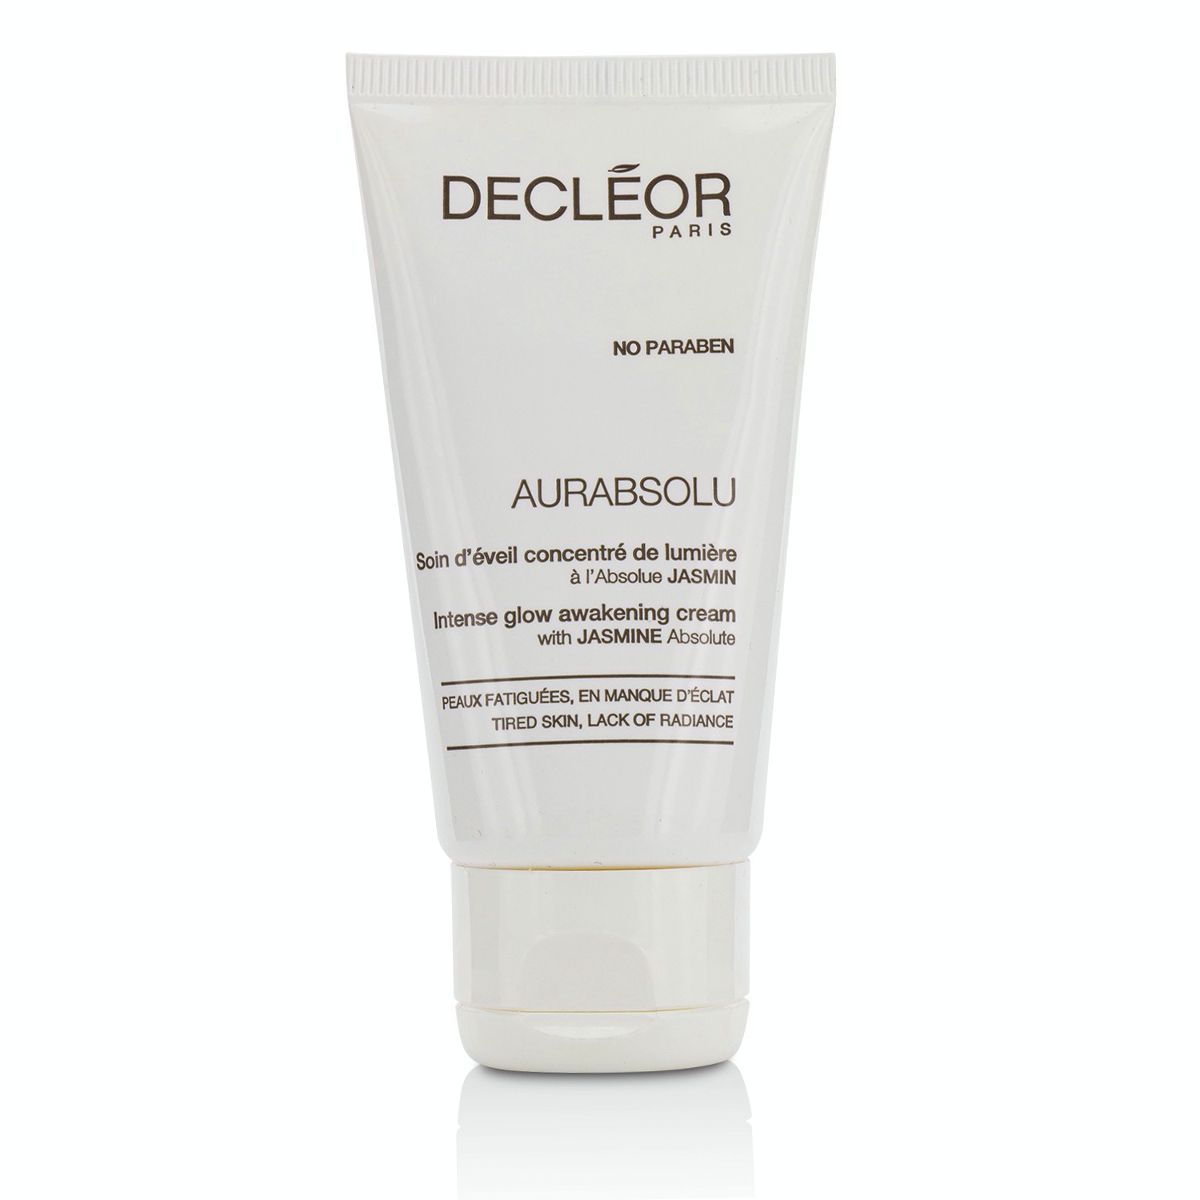 Aurabsolu Intense Glow Awakening Cream - For Tired Skin - Salon Product Decleor Image